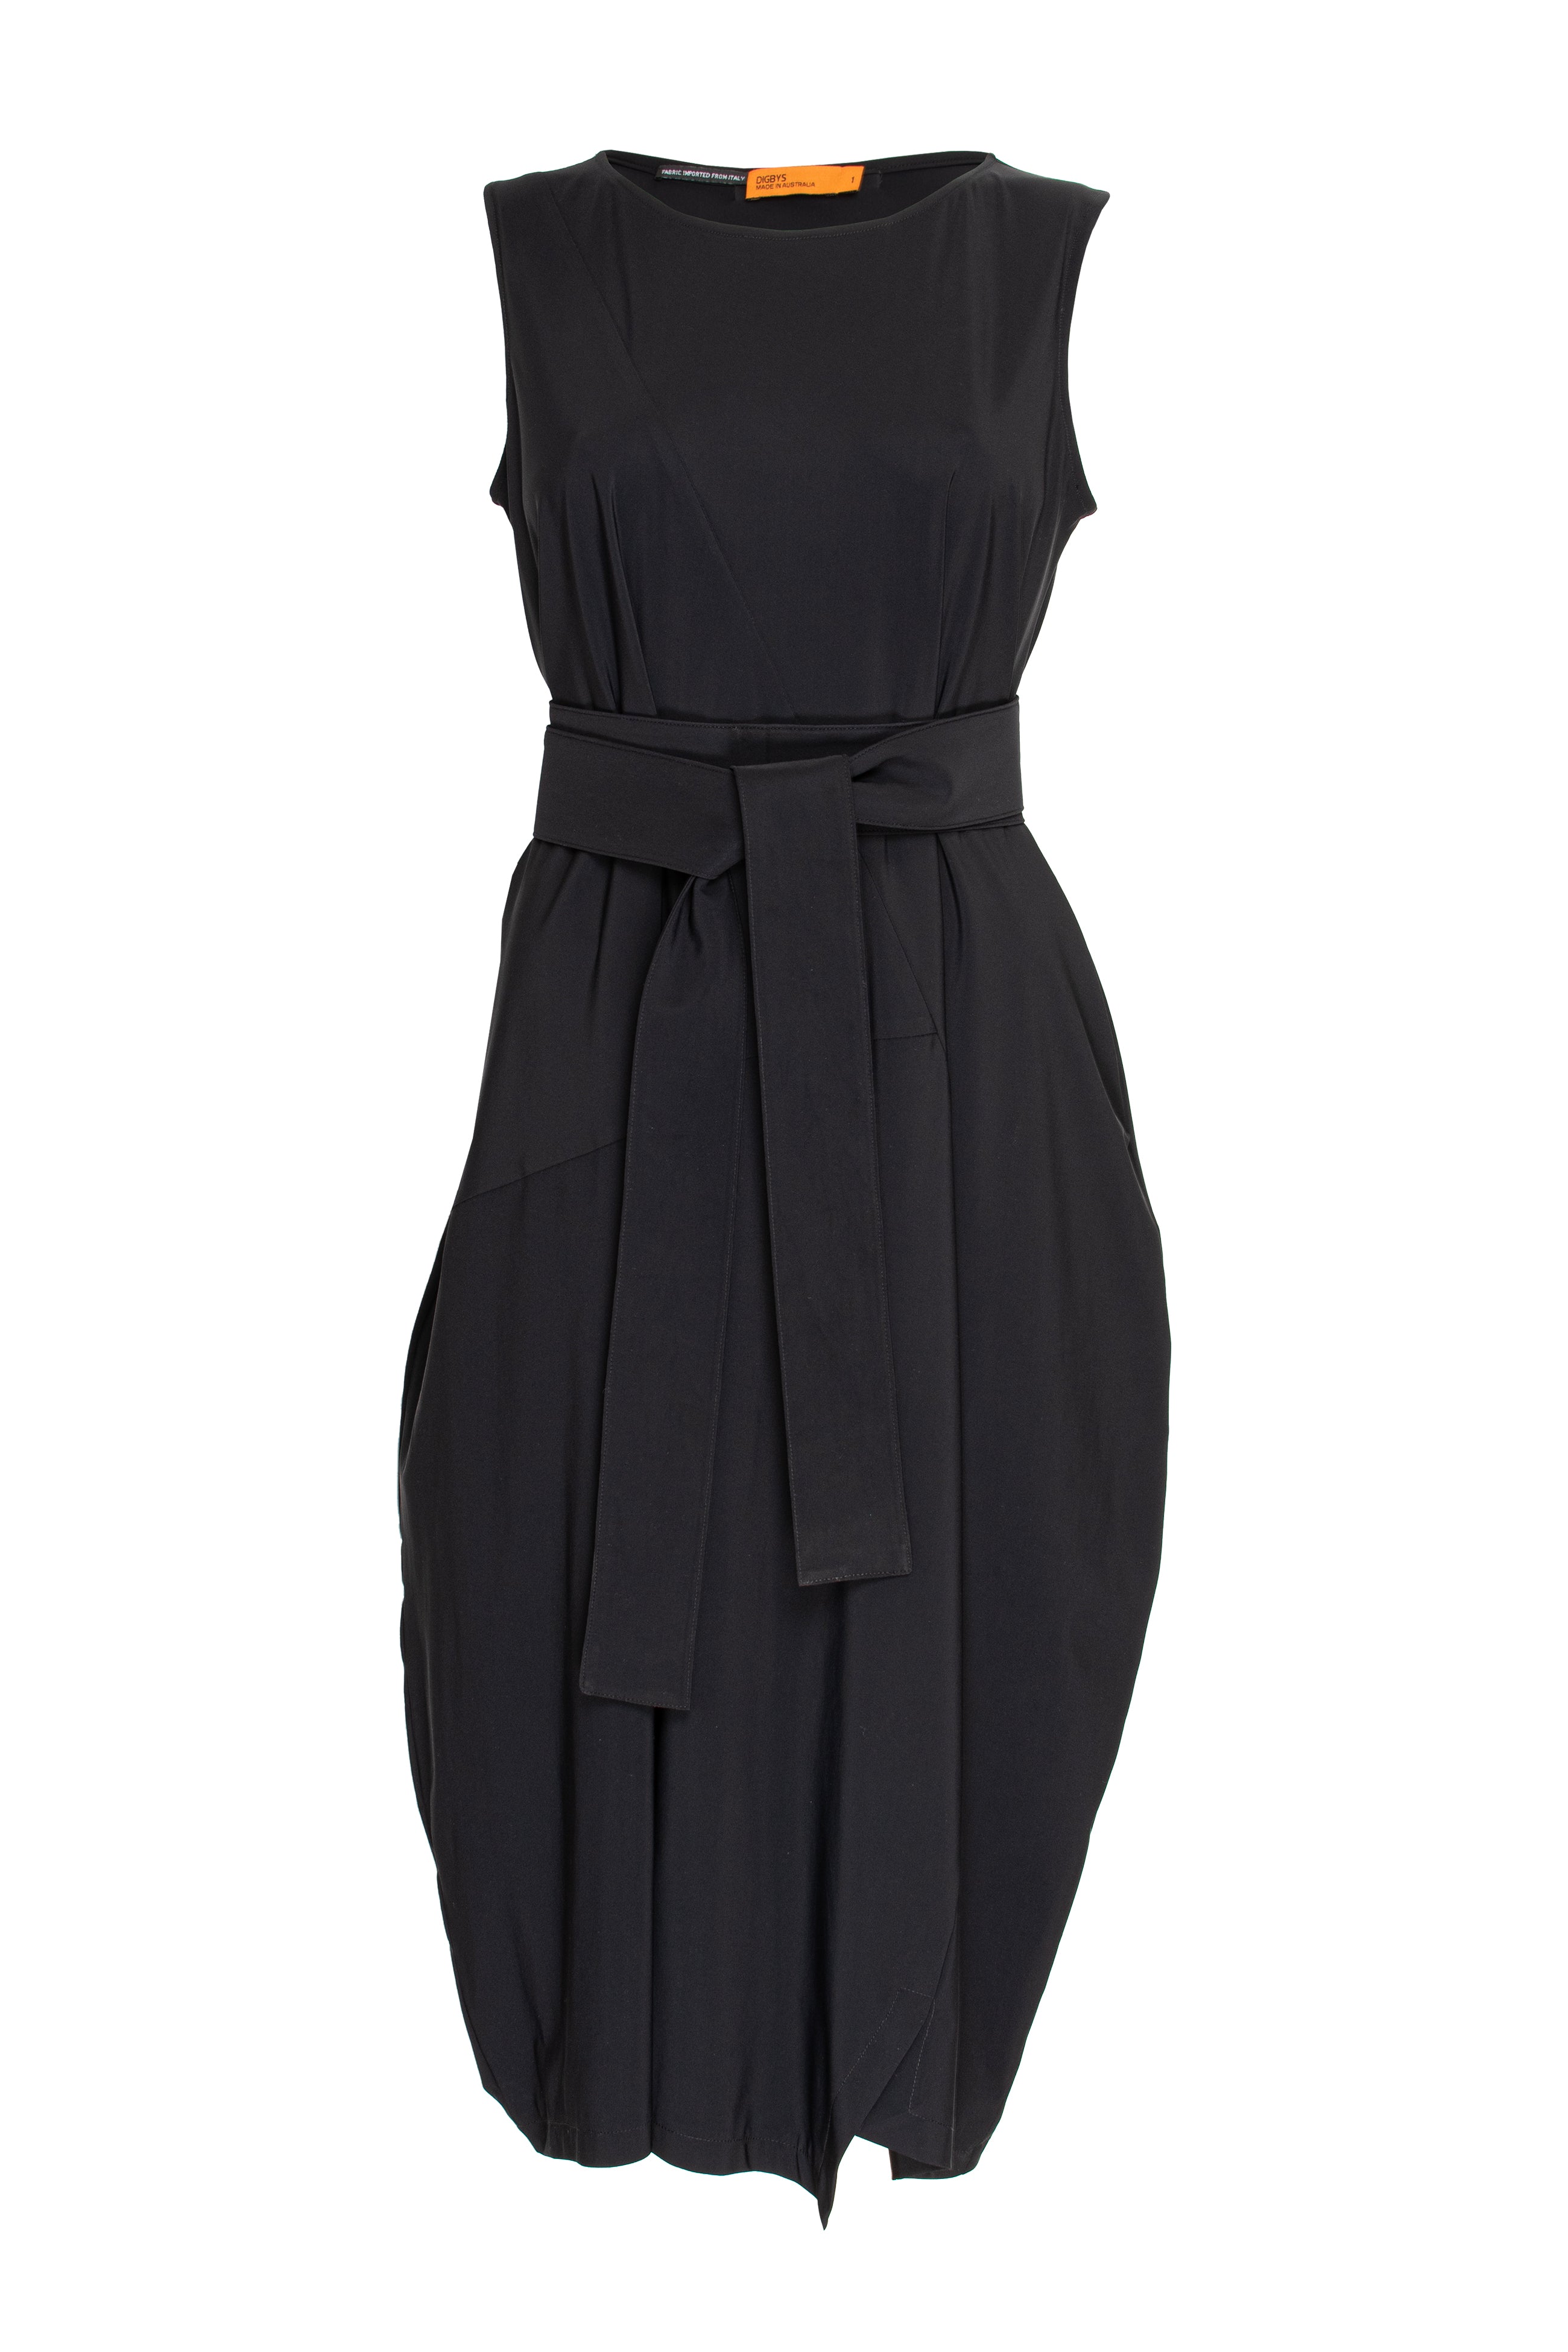 Asymmetric Panel Singlet Dress - Black Jersey 6068